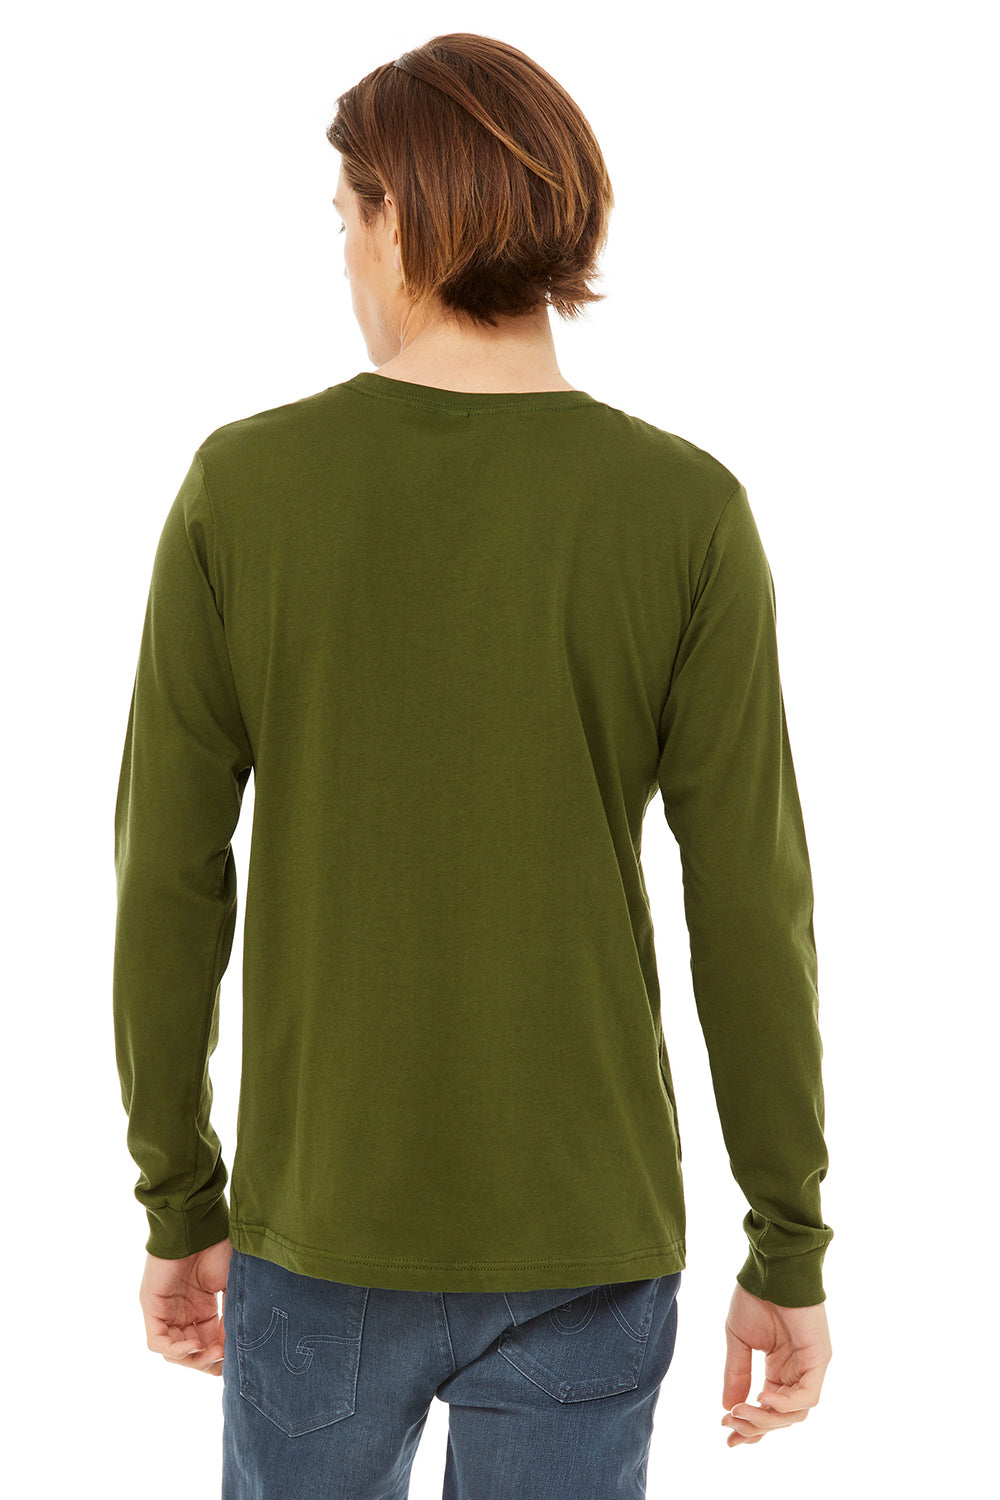 Bella + Canvas BC3501/3501 Mens Jersey Long Sleeve Crewneck T-Shirt Olive Green Model Back